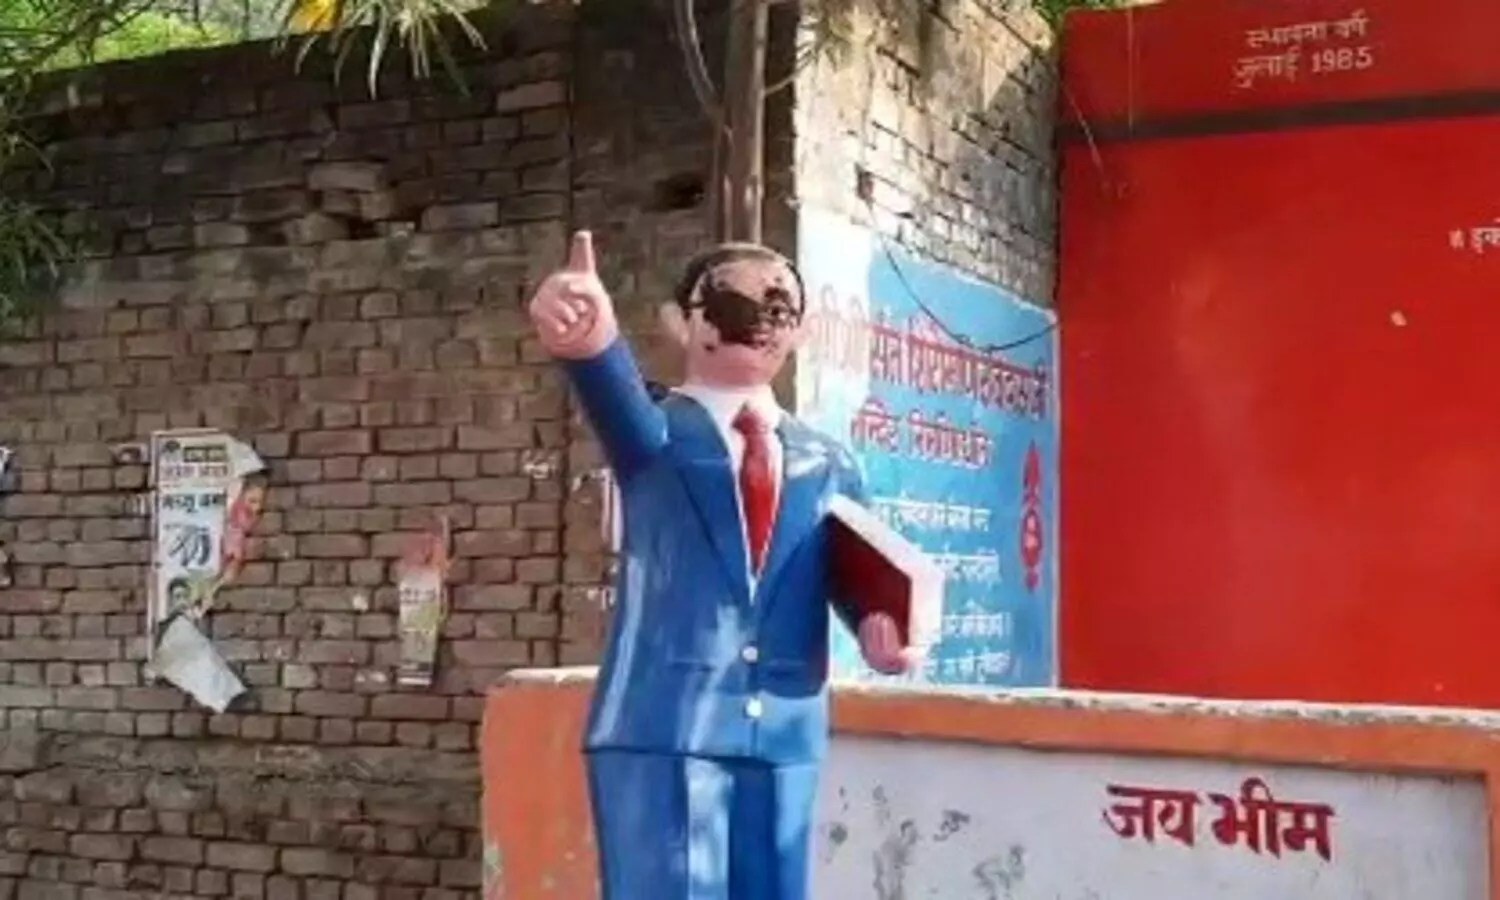 On Dr.Bhimrao Ambedkar statue throw cowdunk